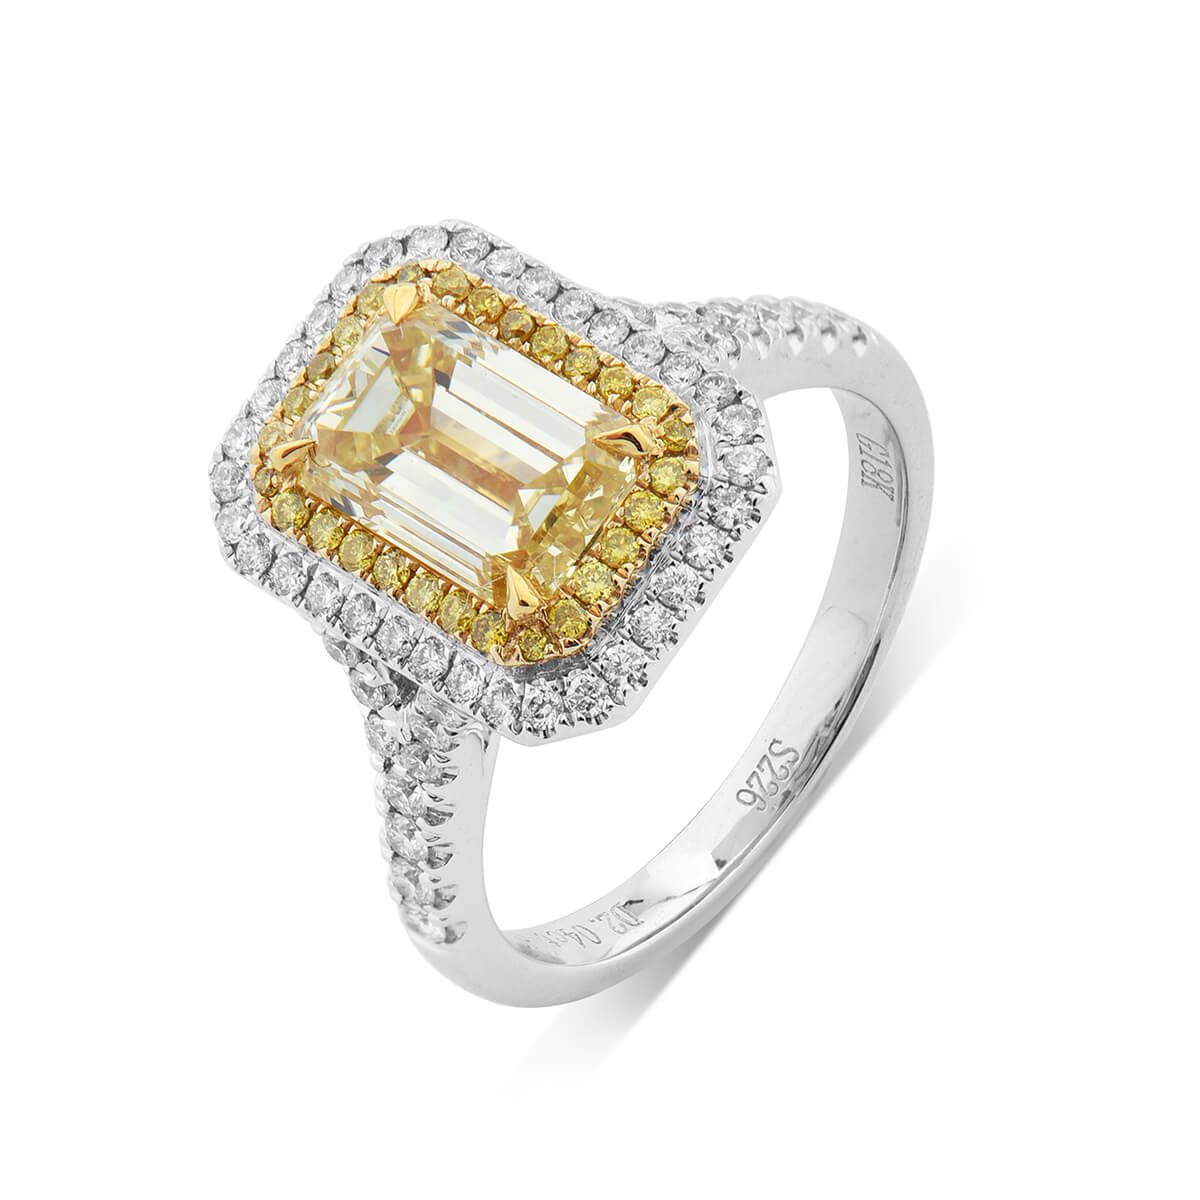 Fancy Yellow Diamond Ring, 2.56 Ct. TW, Emerald shape, GIA Certified, 2183052143